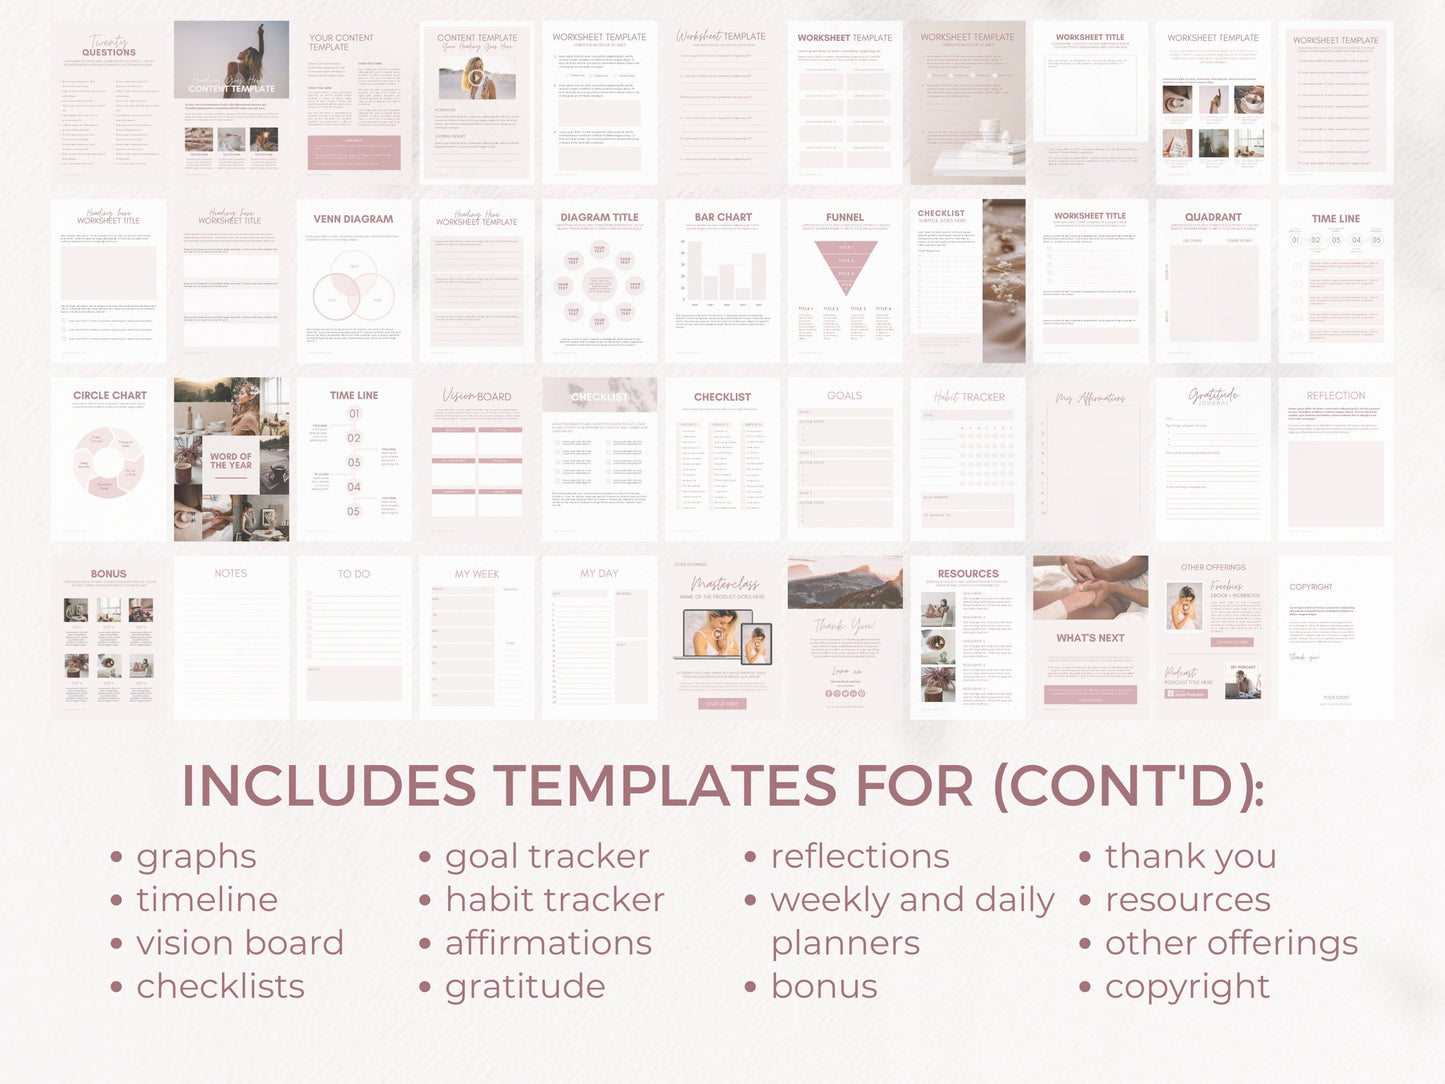 Pink eBook Template Canva for Content Creator Life Coach Wellness Coaching Business  | Spiritual ebook PDF Workbook template lead magnet - CoachTemplate.com 08MREW